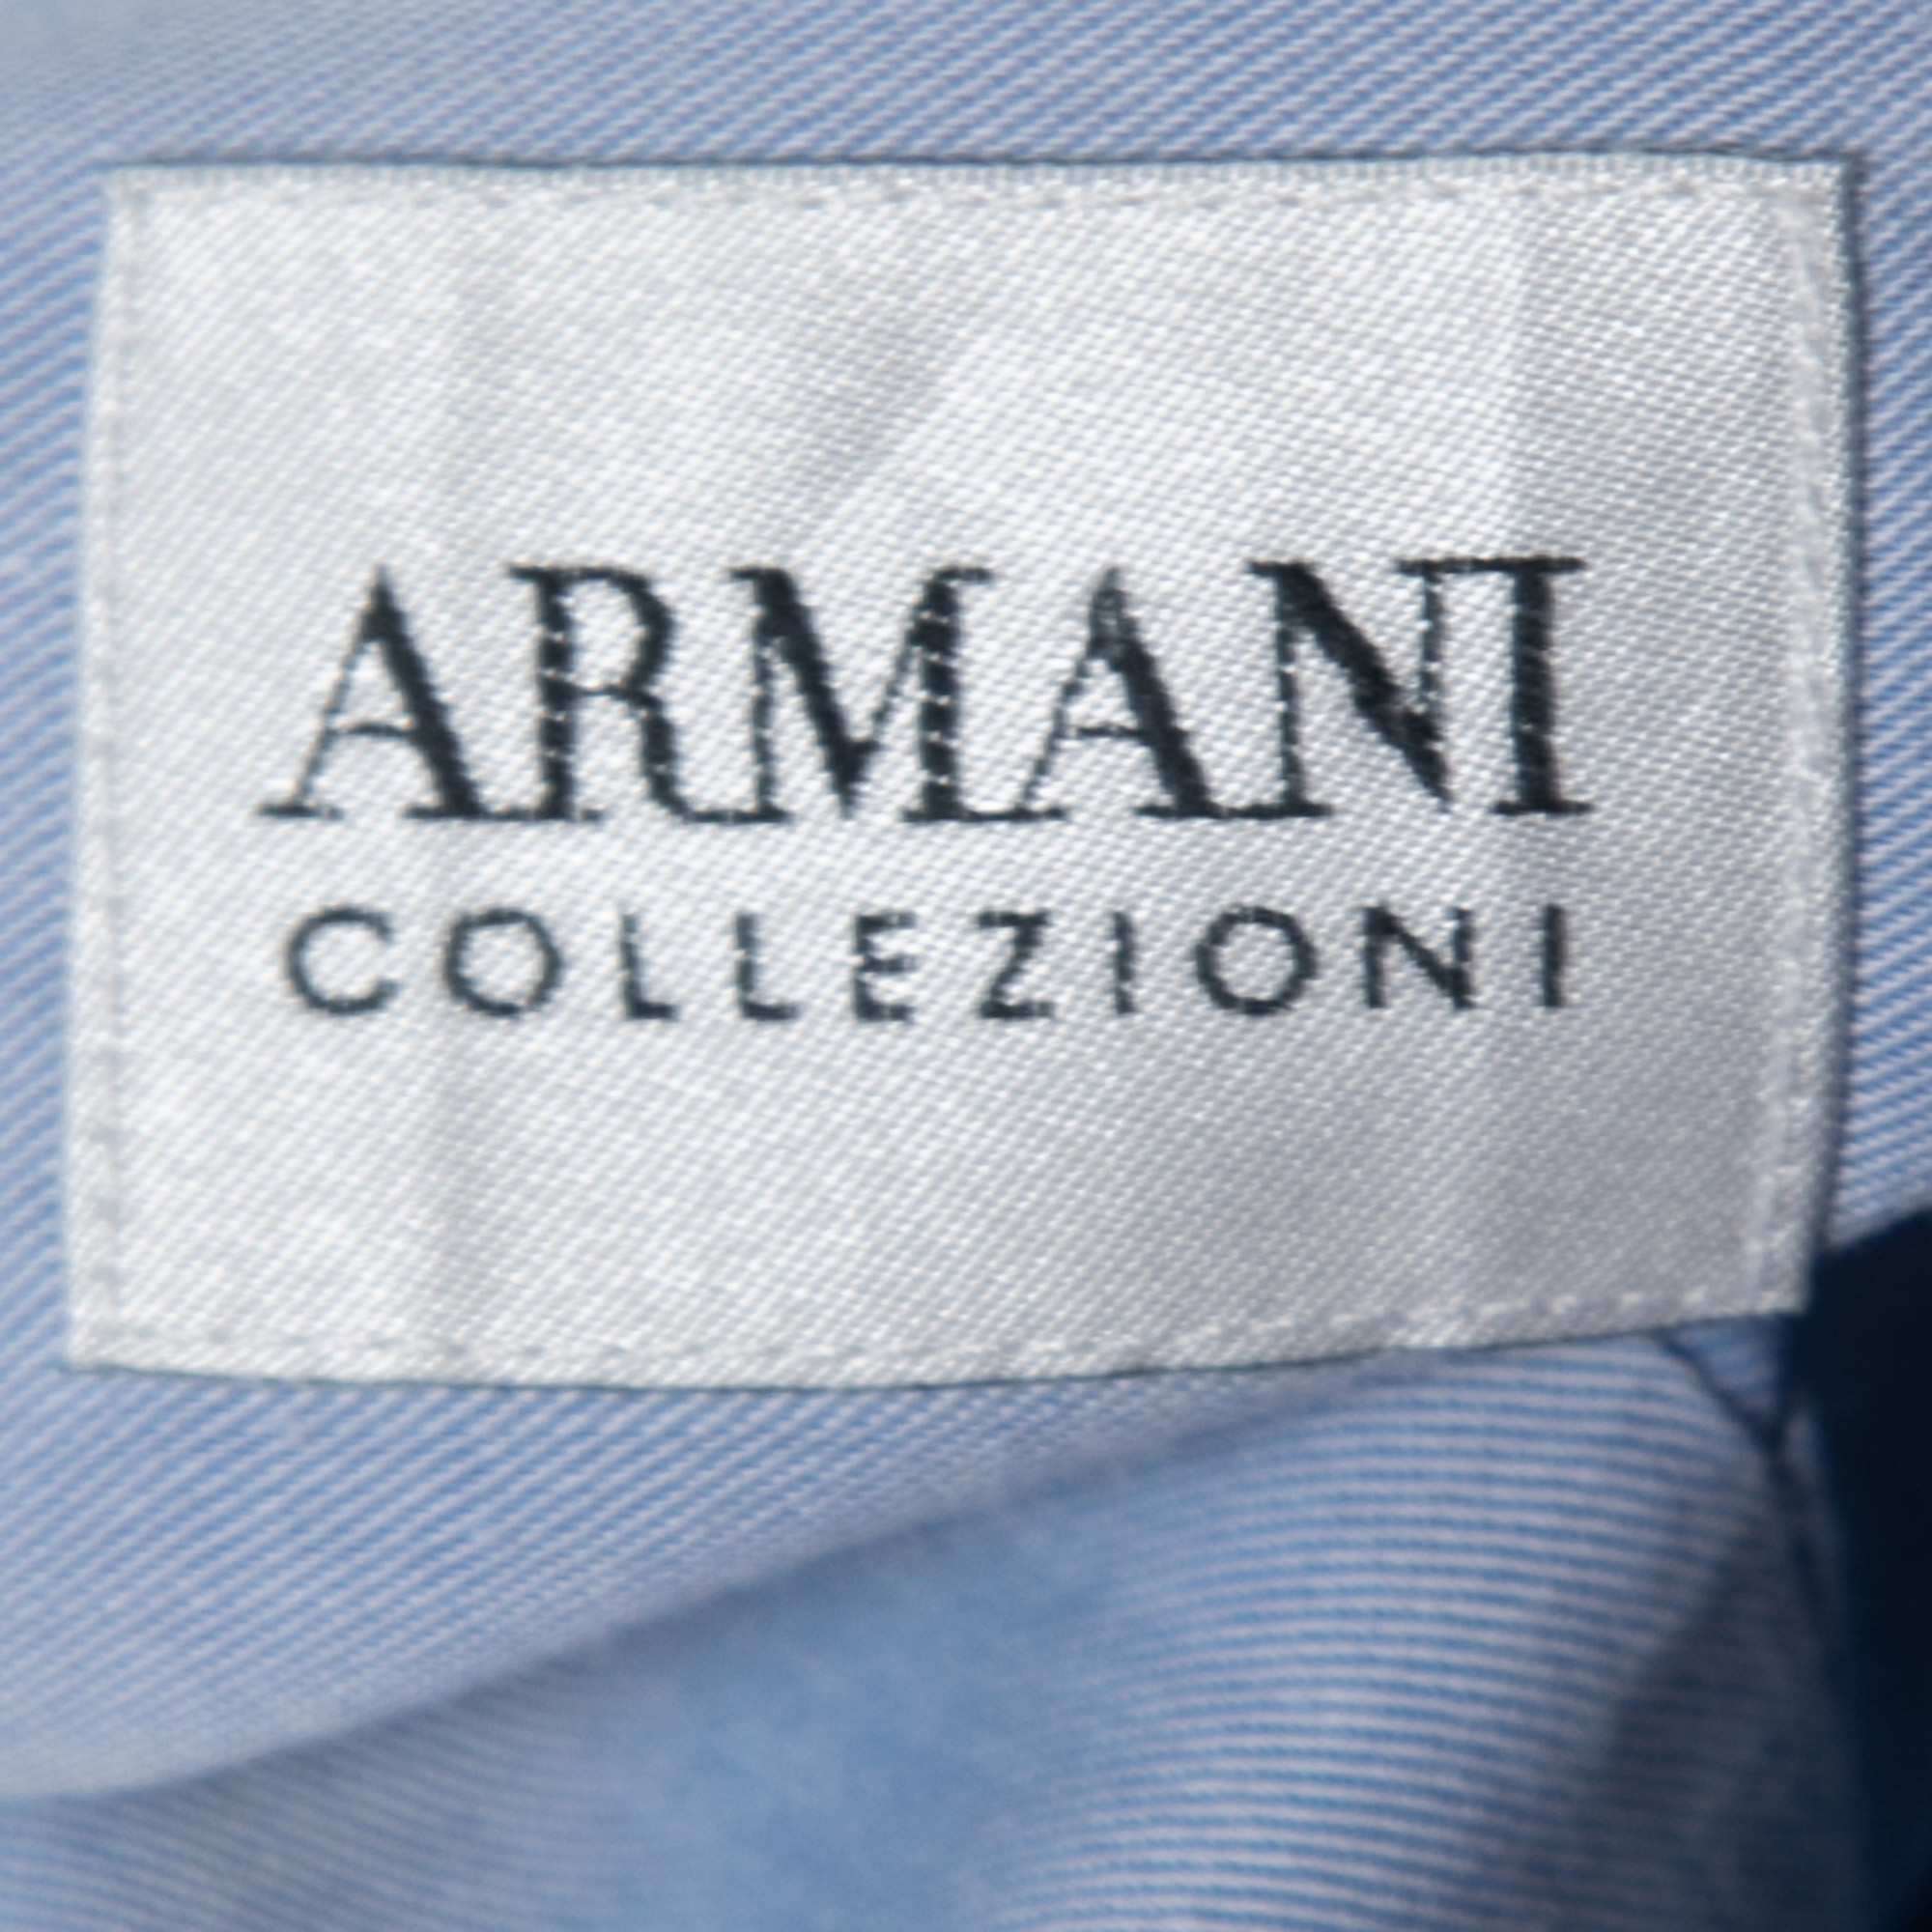 Armani Collezioni Blue Cotton Full Sleeve Shirt M